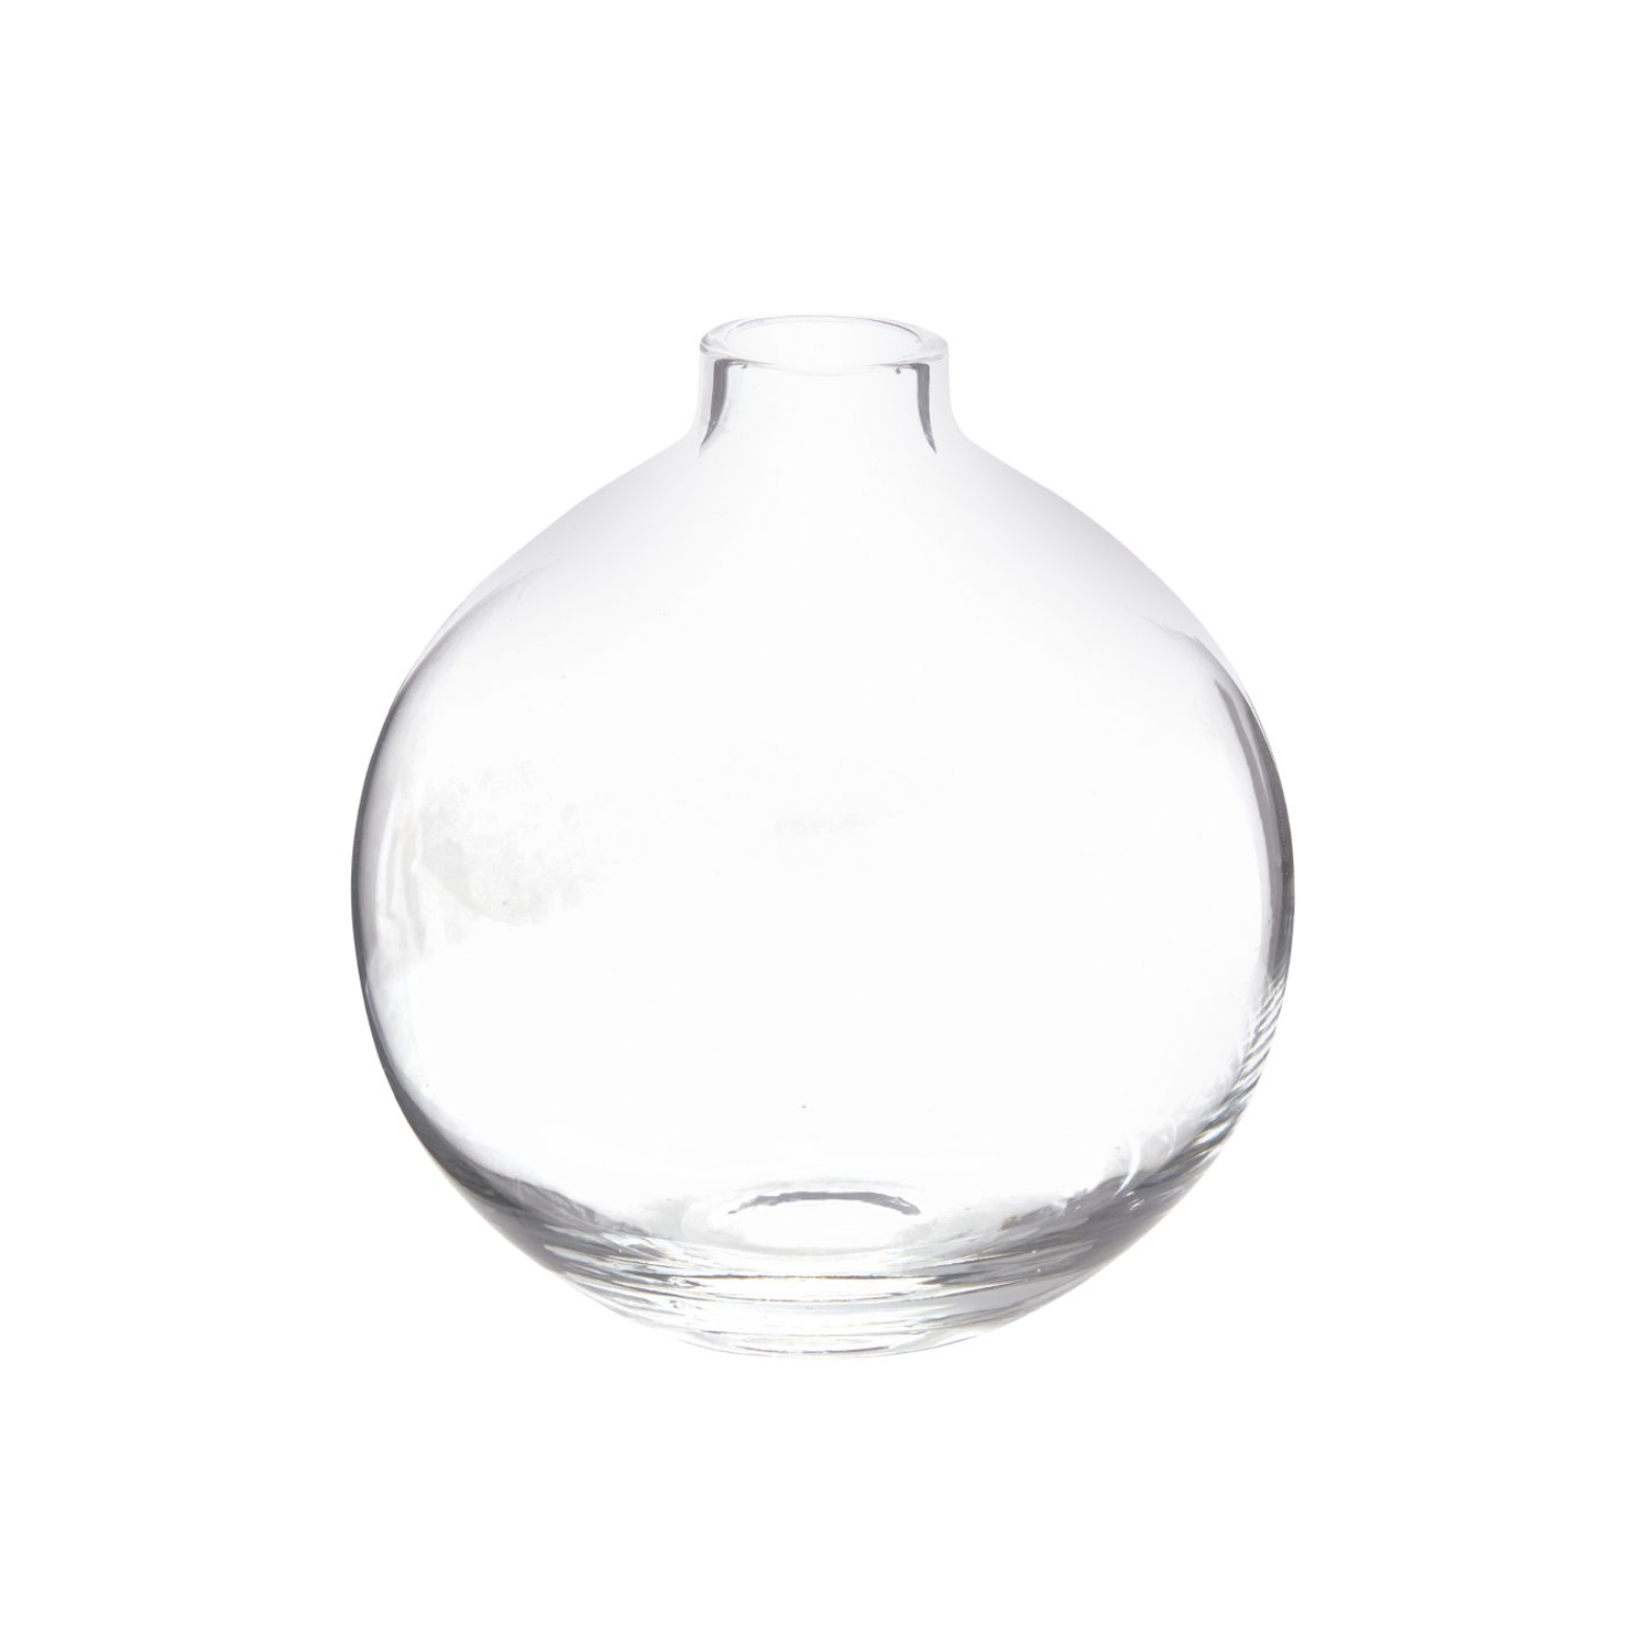 5.75”H X 5” GLASS CHIM BUDVASE